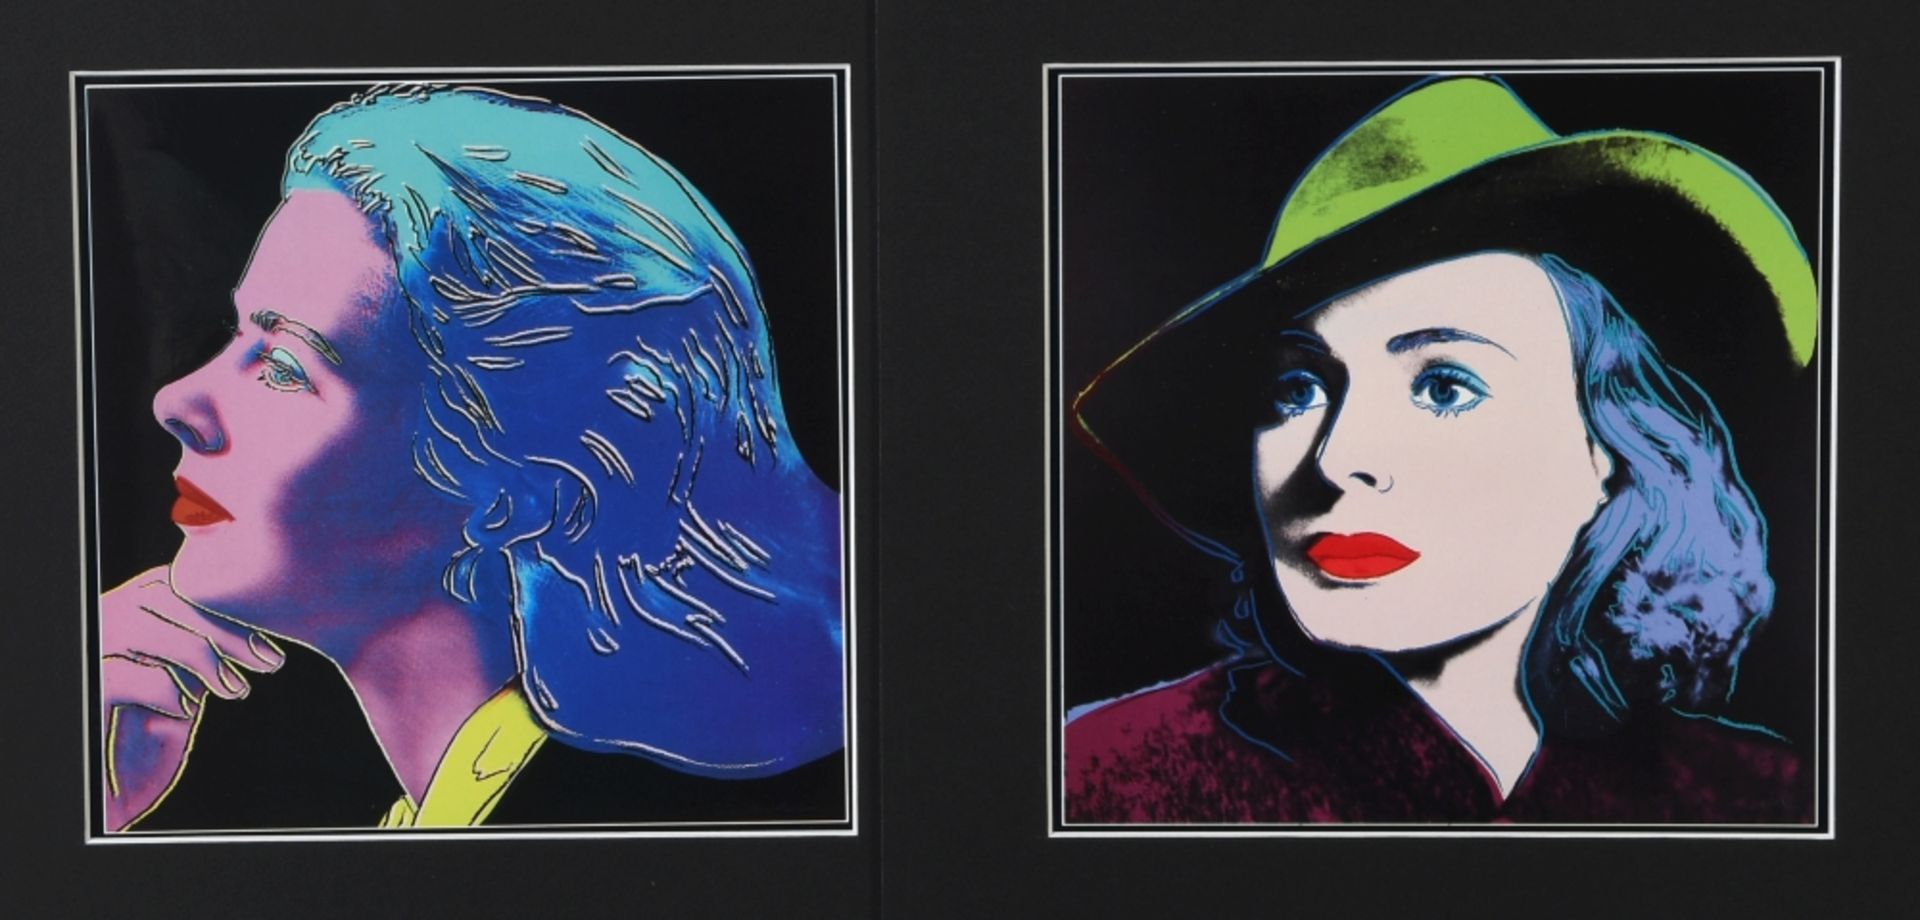 Warhol, Andy, 1928 Pittsburgh - 1987 New York